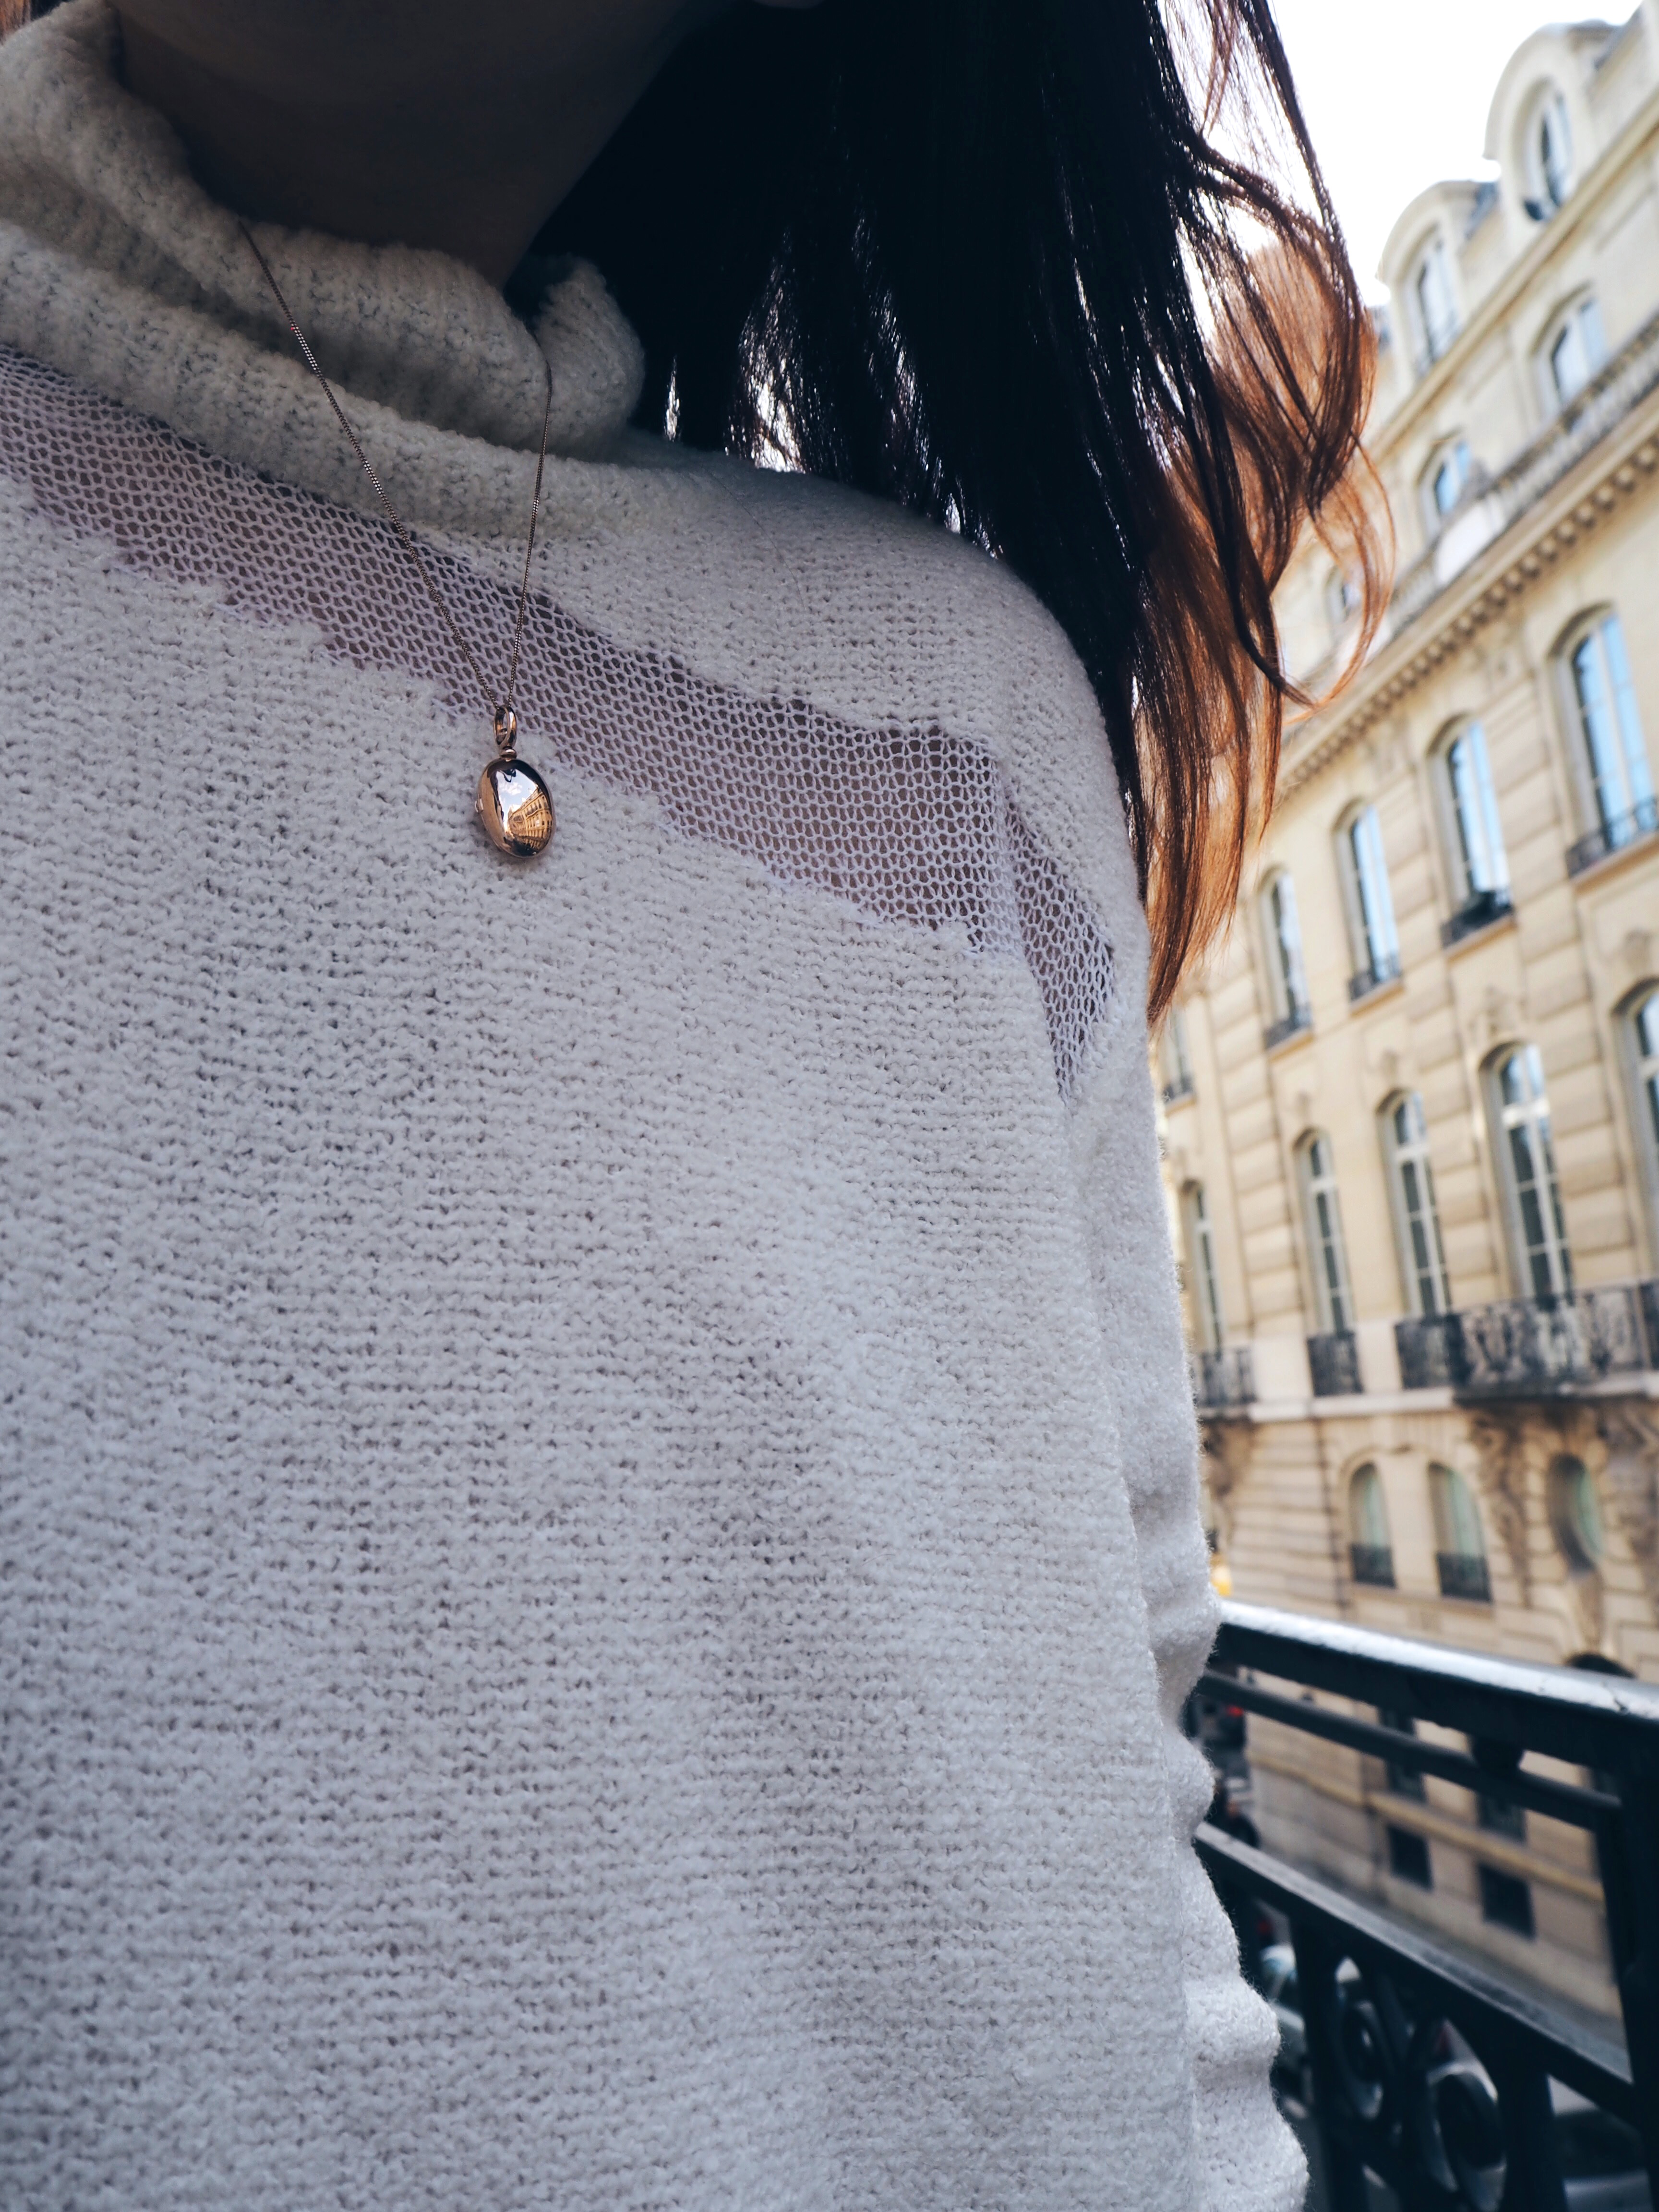 parisian-balcony-view-elie-tahari-cashmer-knit-gold-pendant